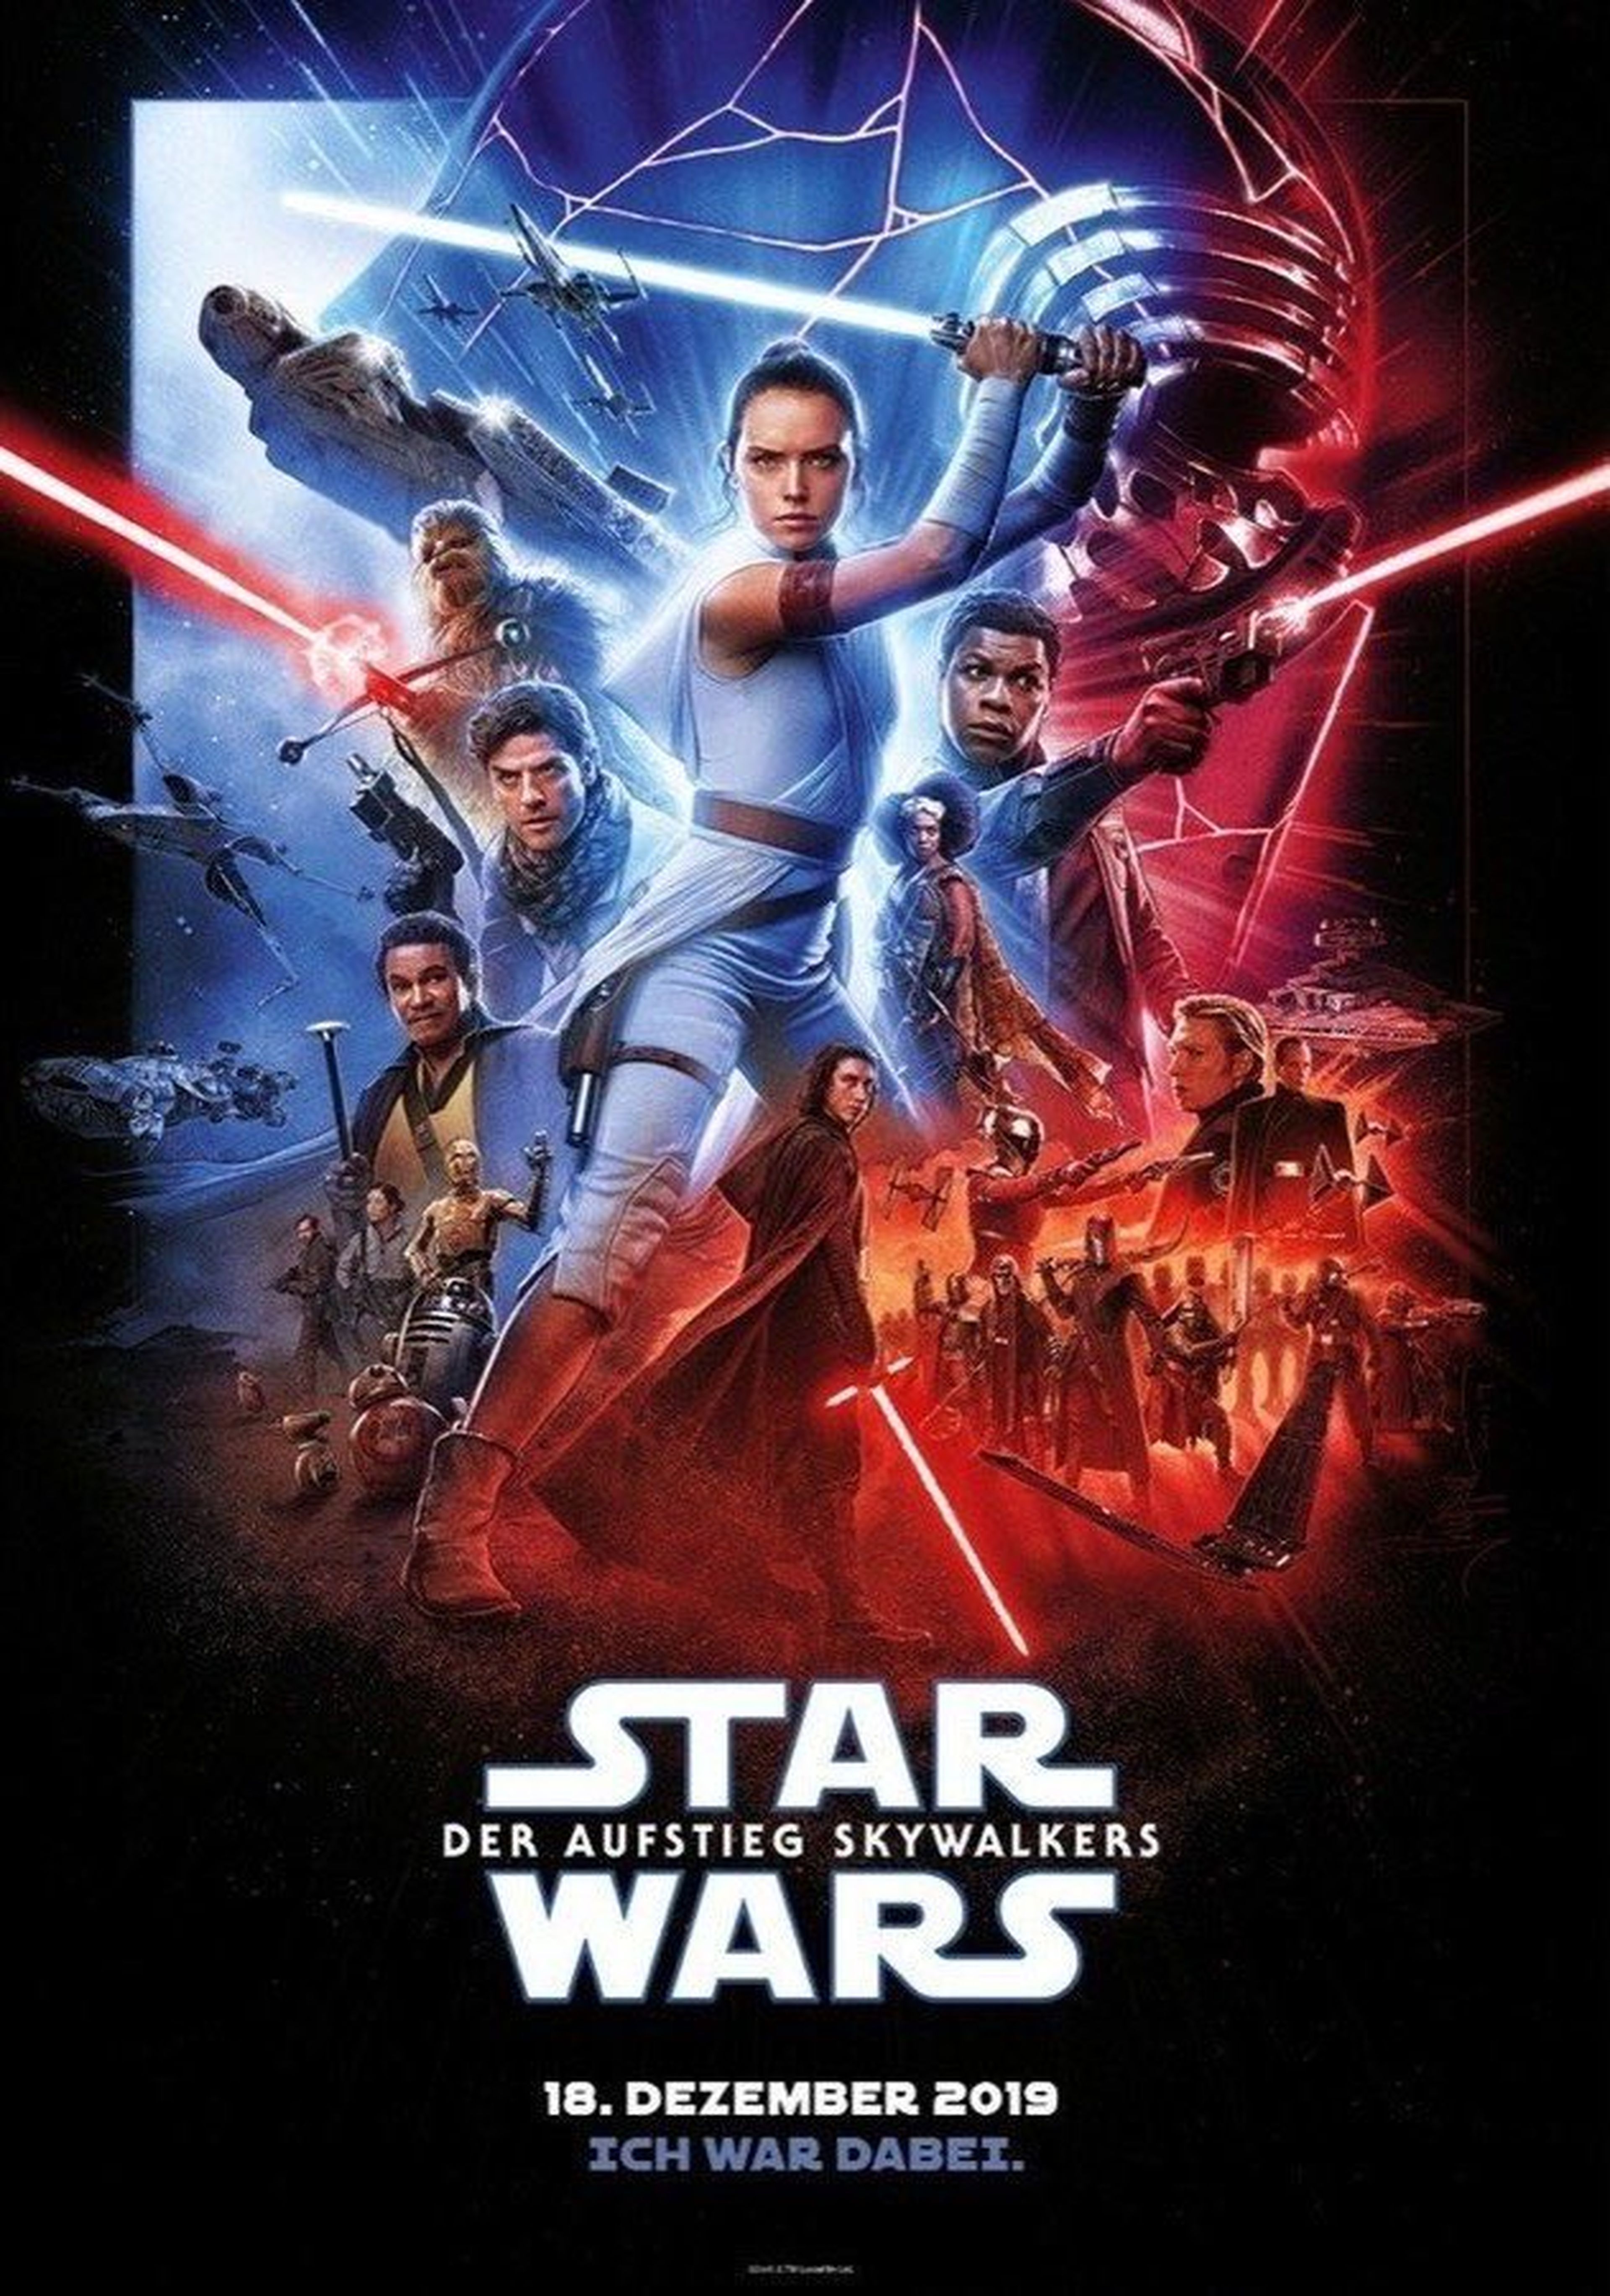 Star Wars episodio IX: El ascenso de Skywalker - Póster